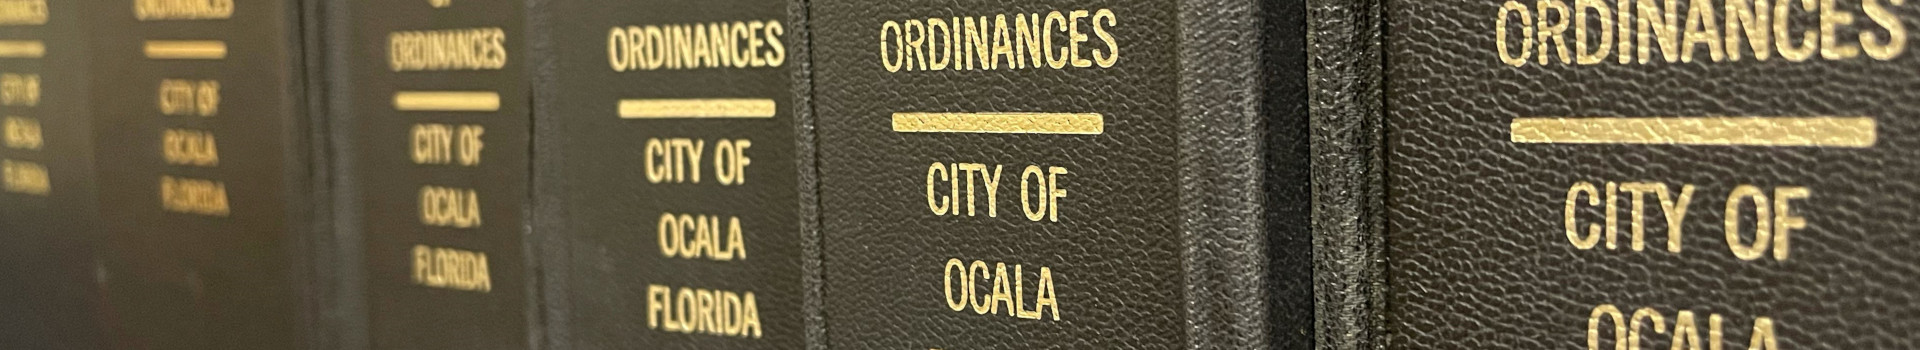 City of Ocala Ordinances